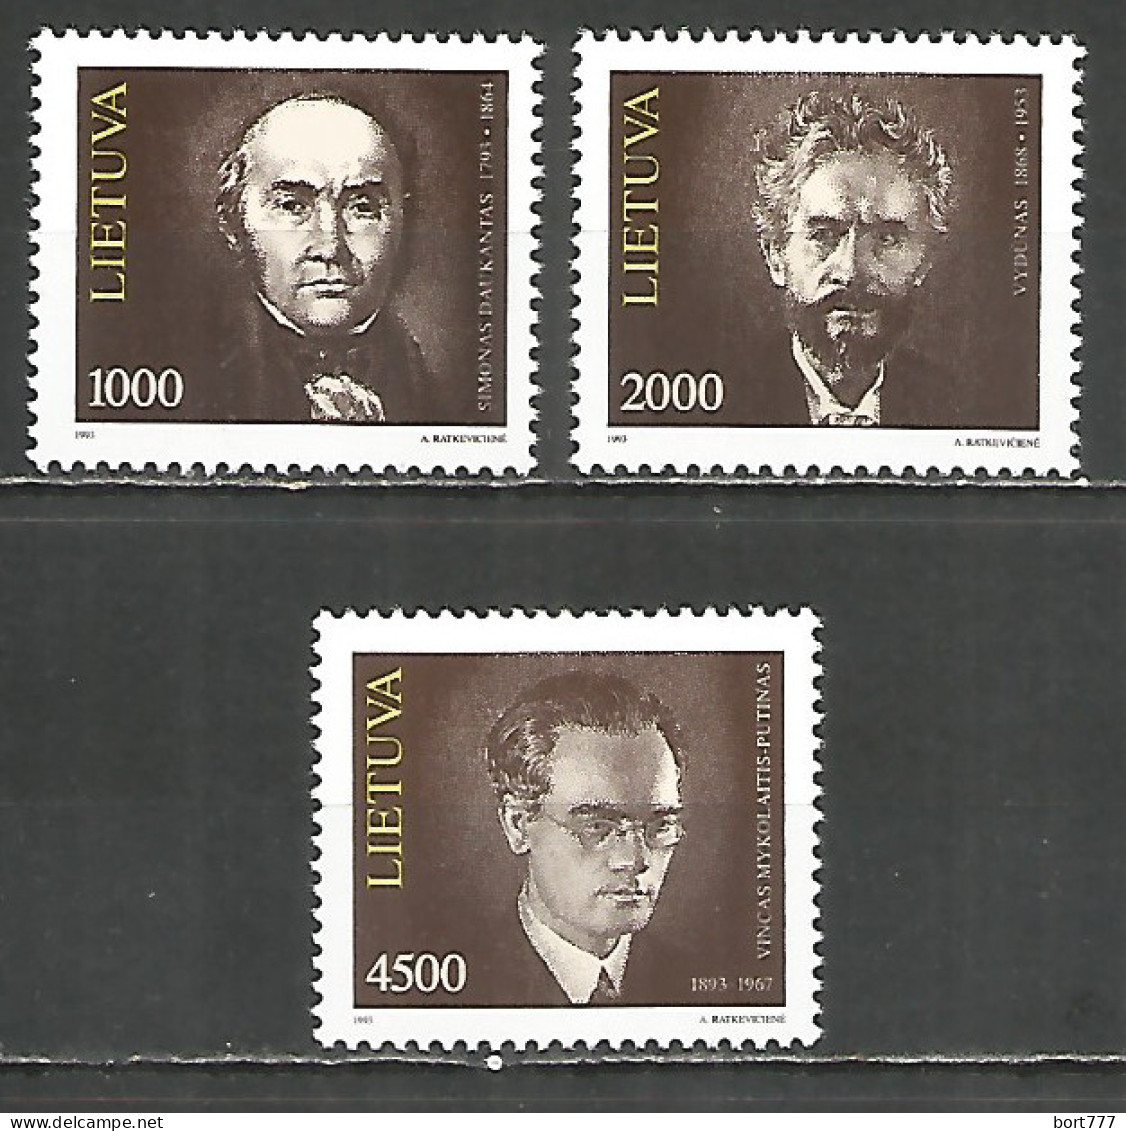 Lithuania 1993 Mint Stamps MNH (**)  - Lithuania